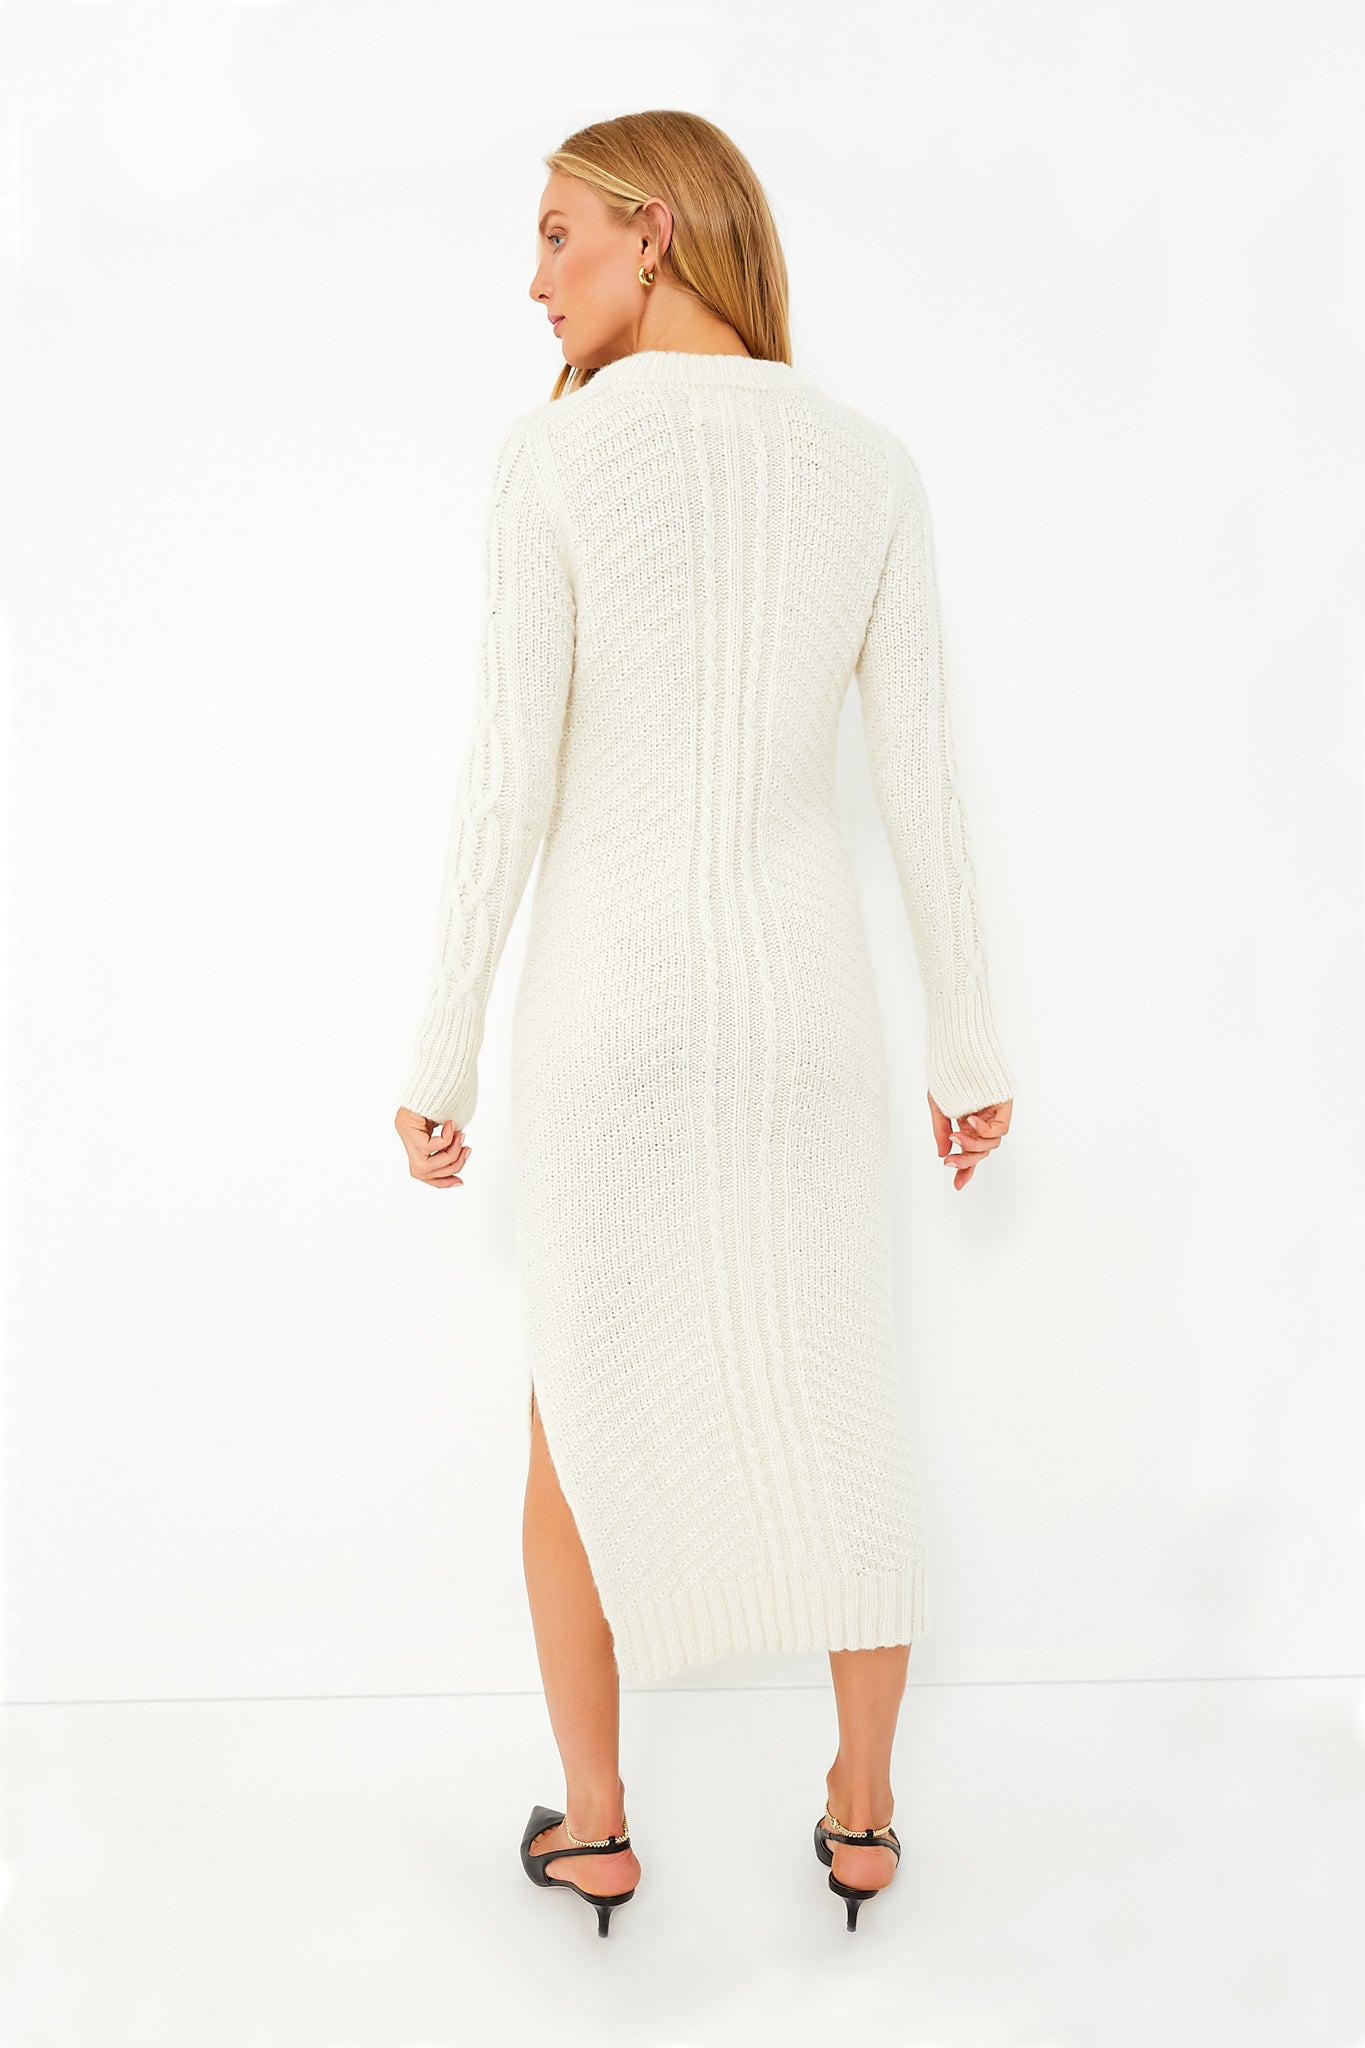 Ivory Cable Knit Dress - 2-Pc Sweater Dress Set - Cardi Dress Set - Lulus